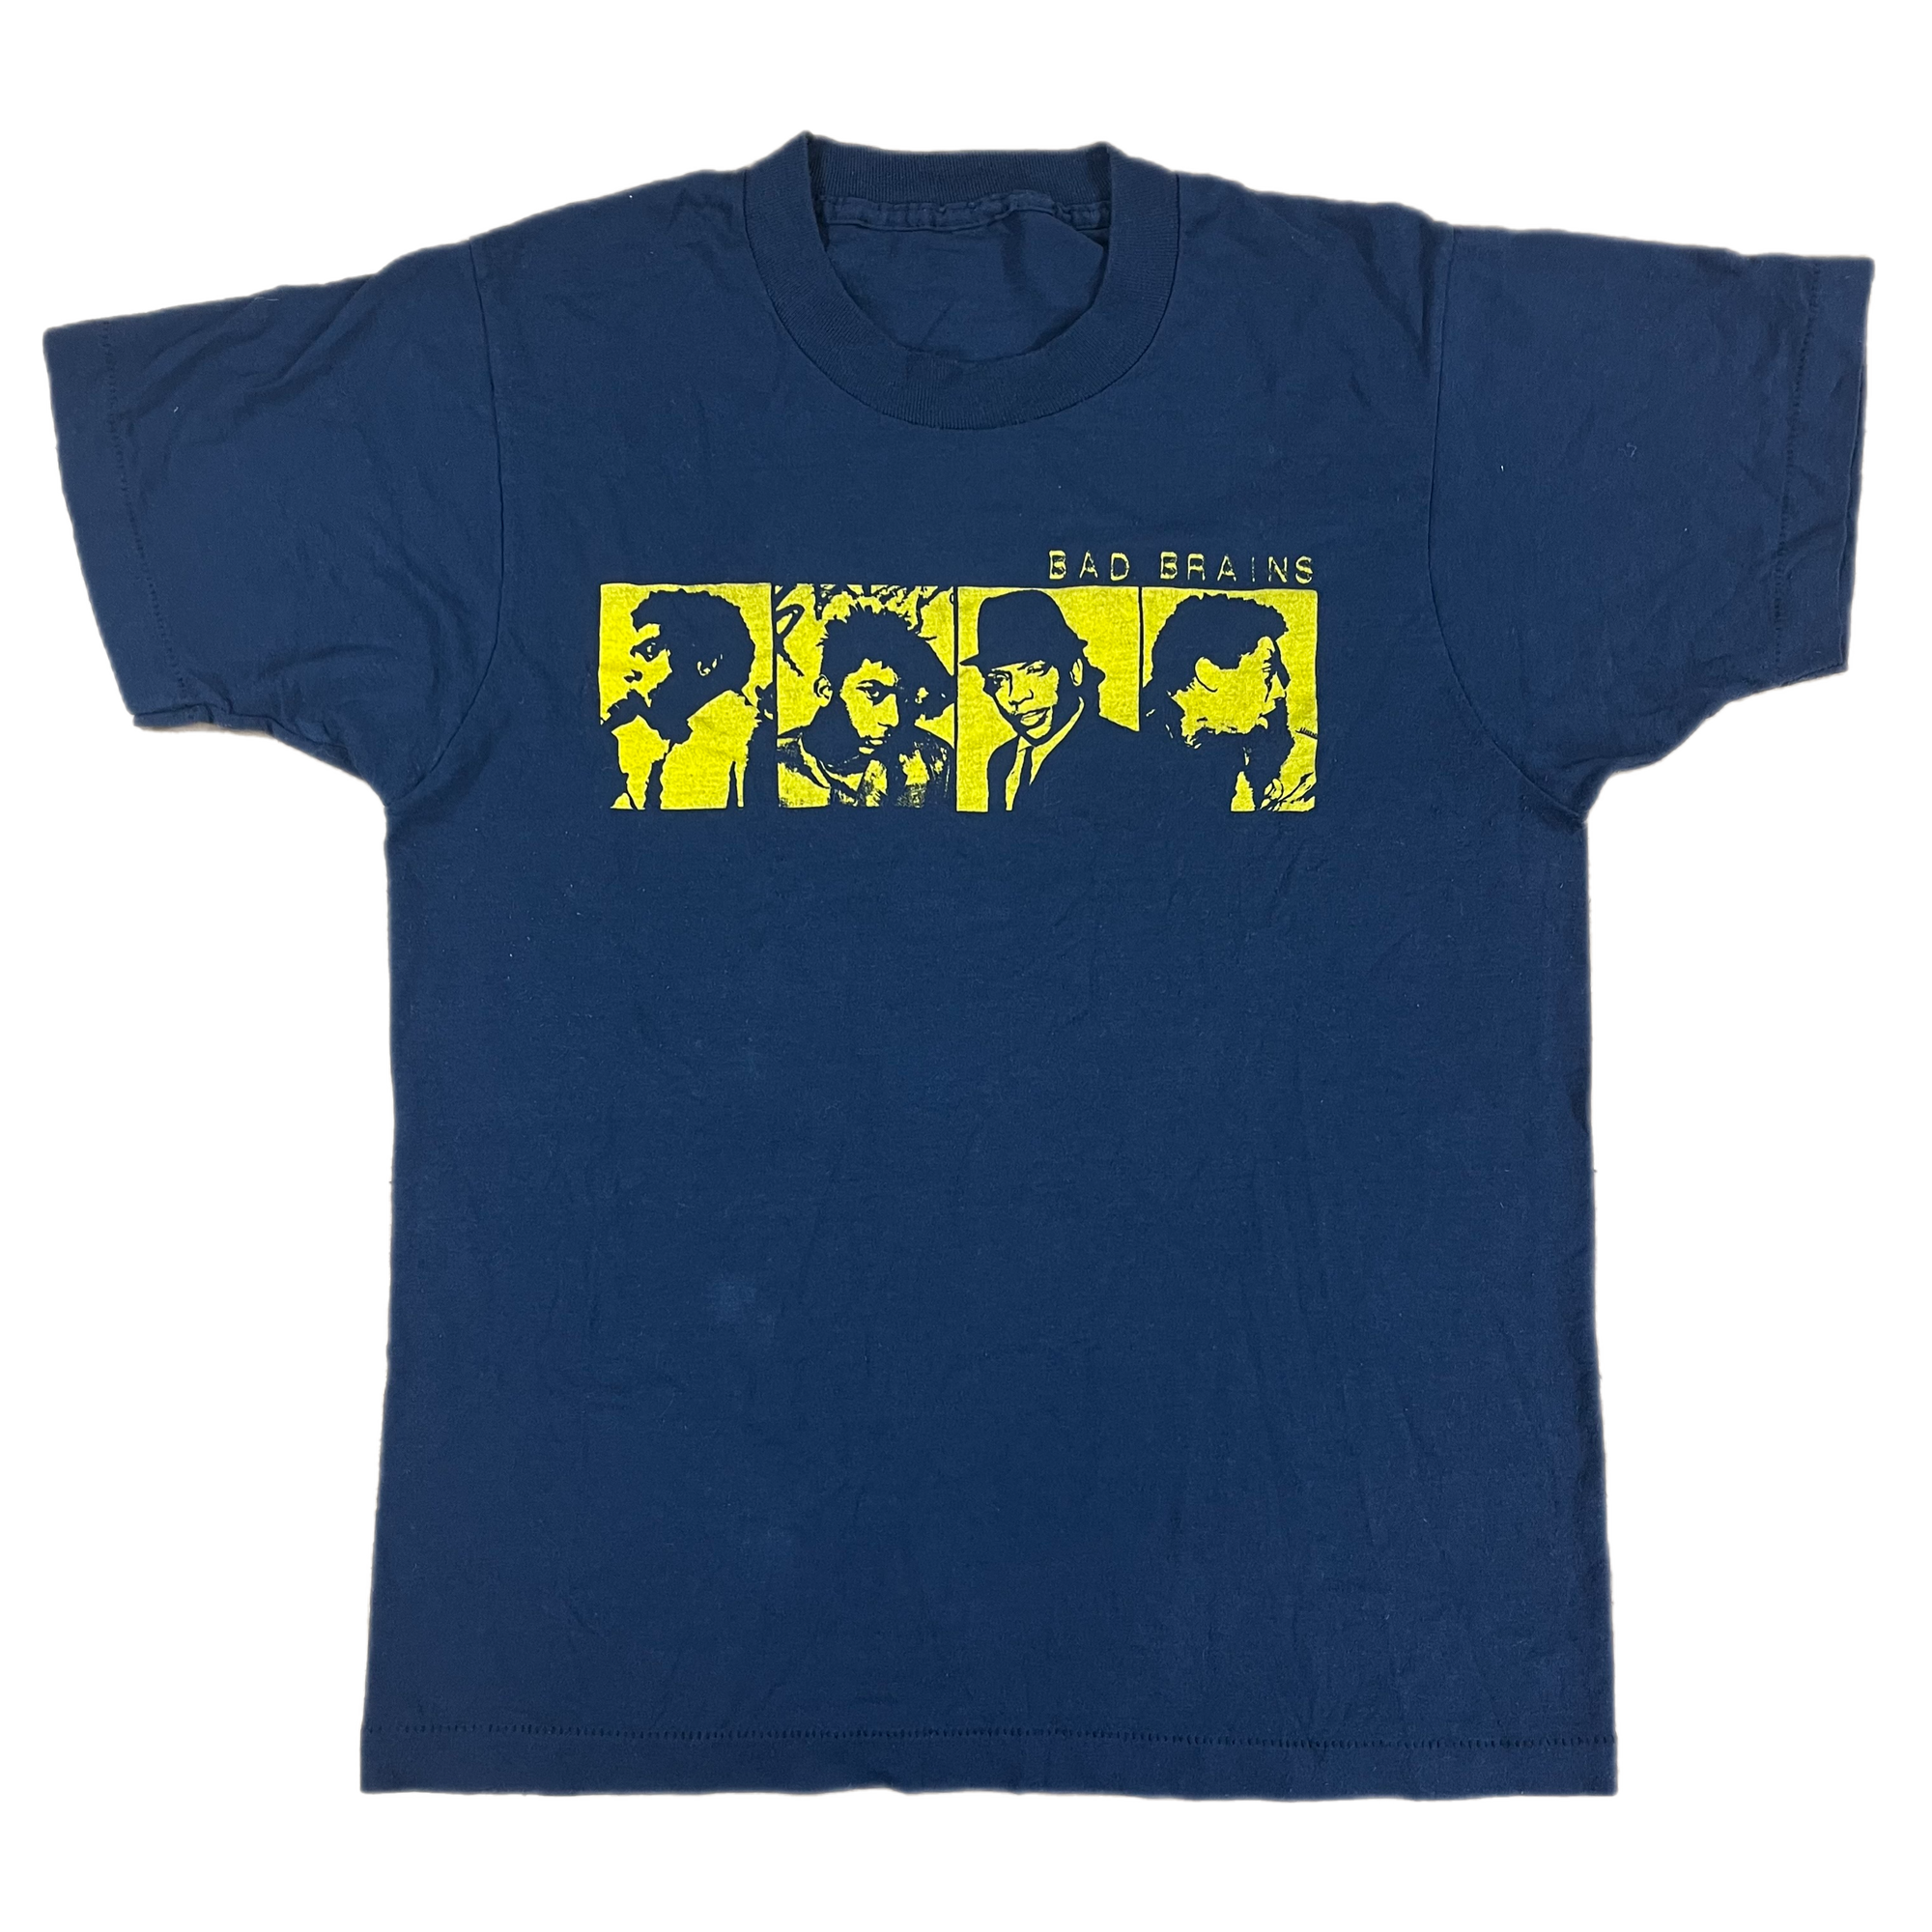 Vintage 80s Bad Brains Quickness 1989 Direct Merchandising Black Lightning  DC Hardcore Punk T Shirt Made in Usa 